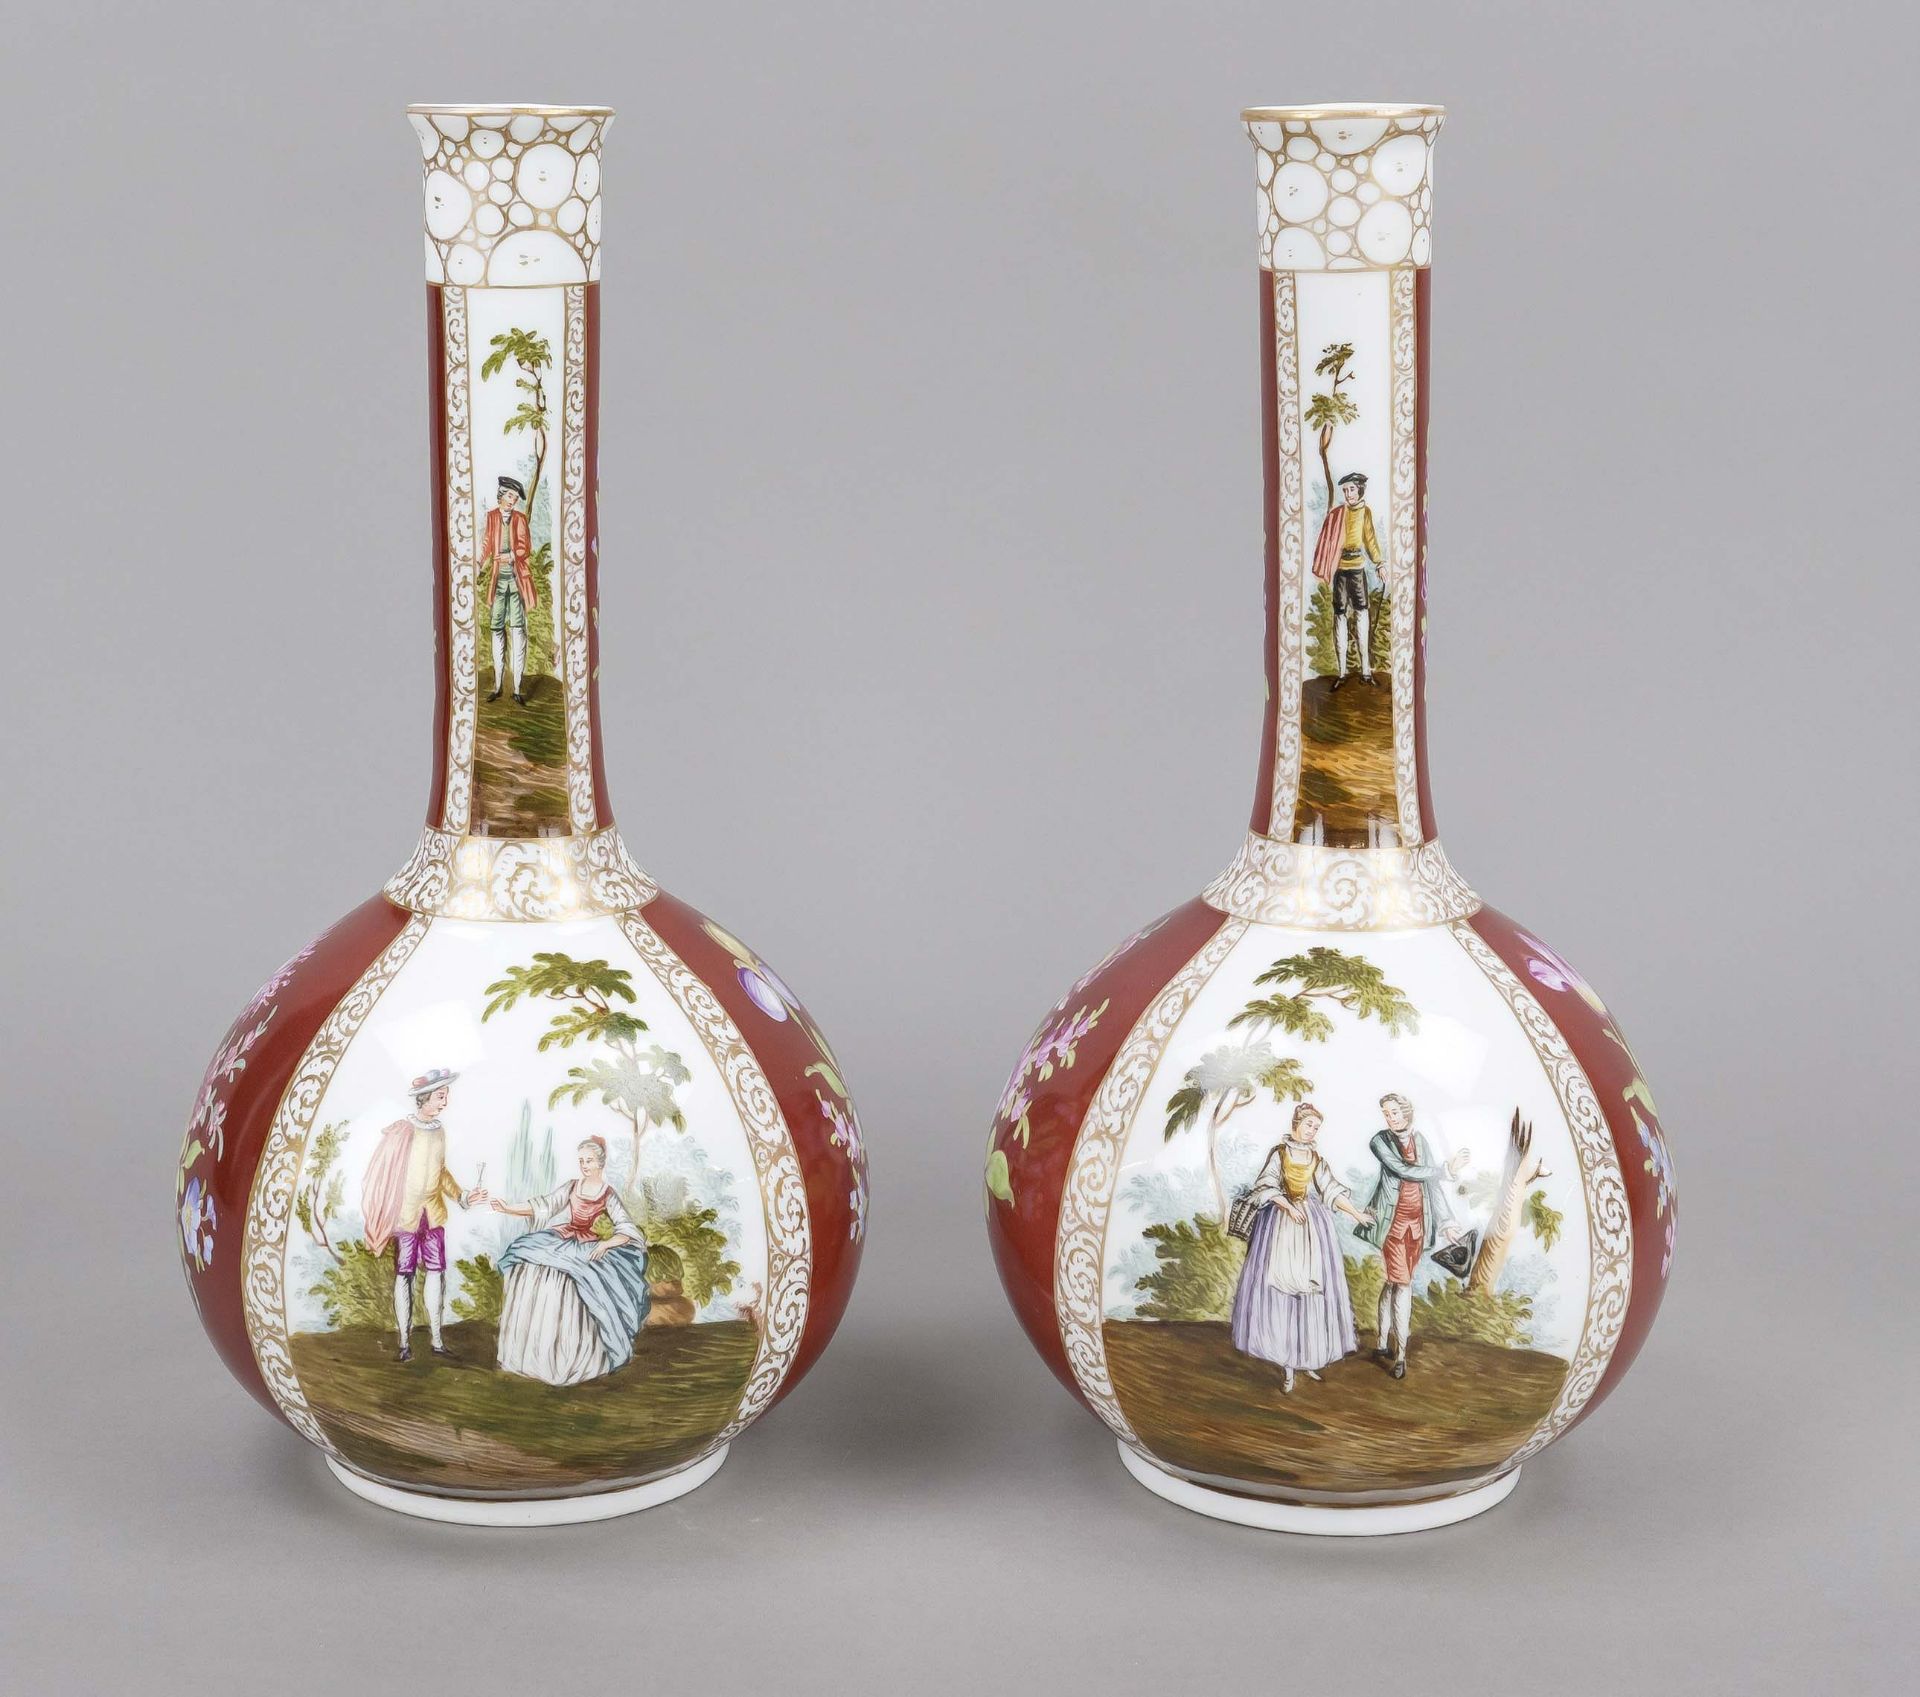 Pair of bottle vases, Köppelsdorf, Thuringia, c. 1920-40, polychrome painting, gallant scenes